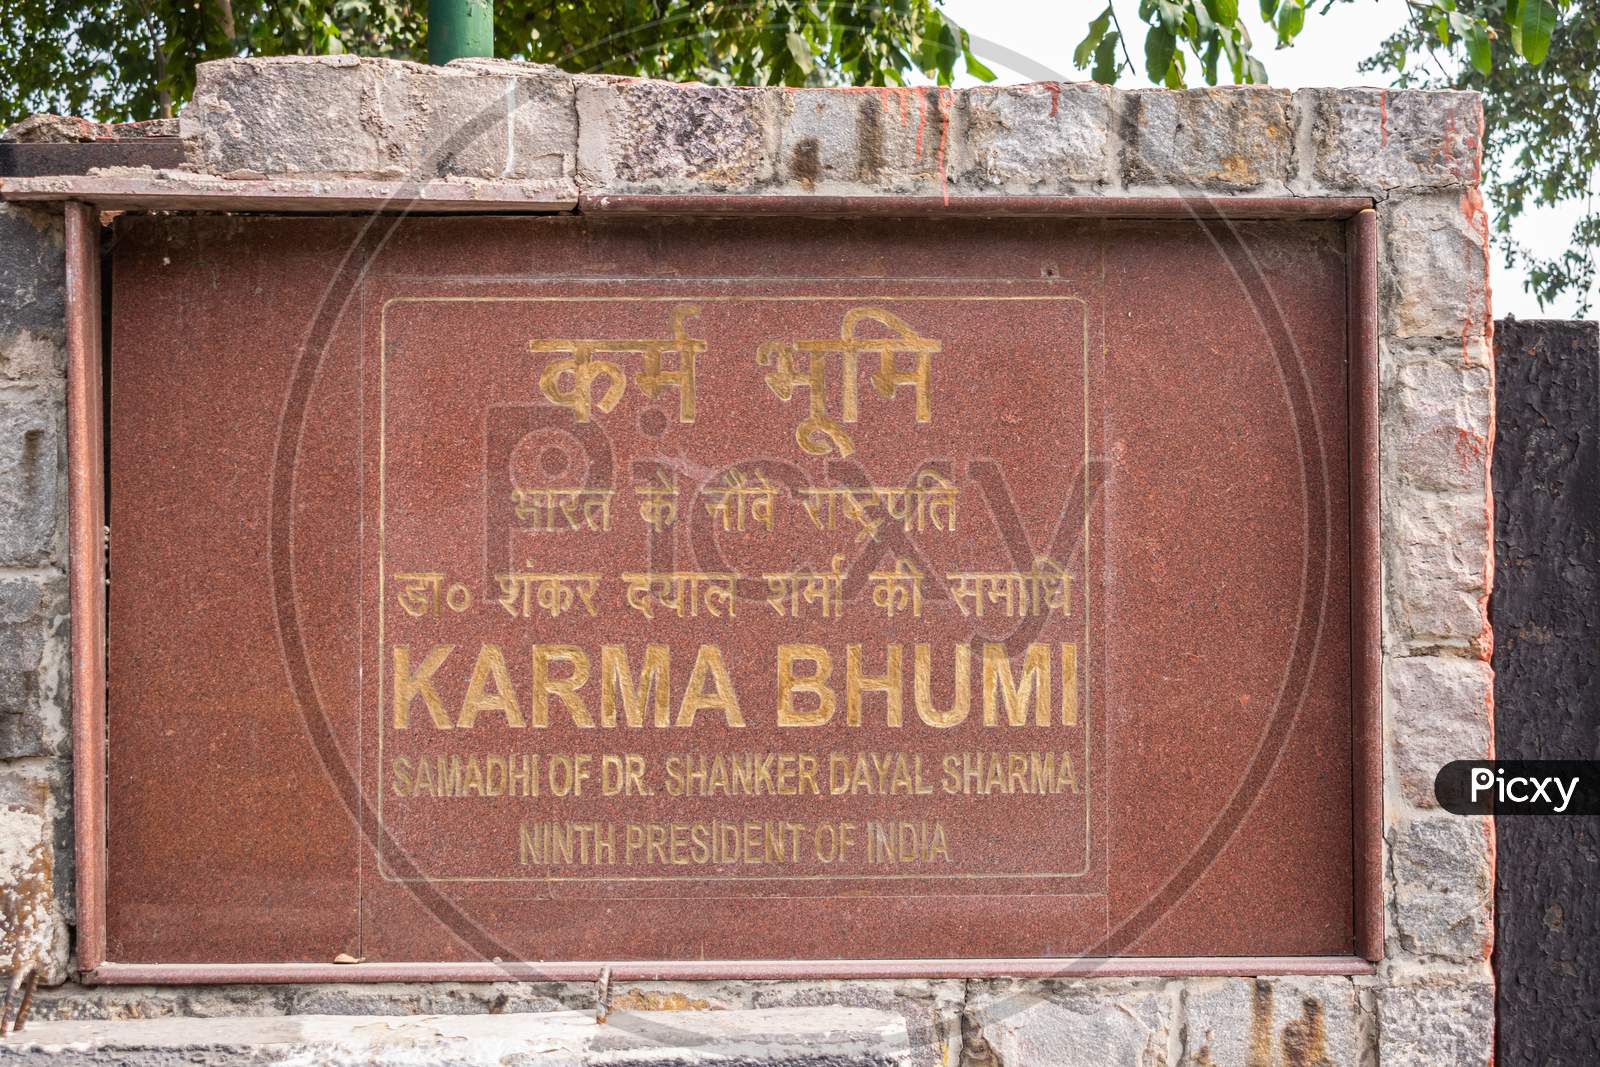 Karma Bhumi- Samadhi of Dr. Shanker Dayal Sharma 9th president of India